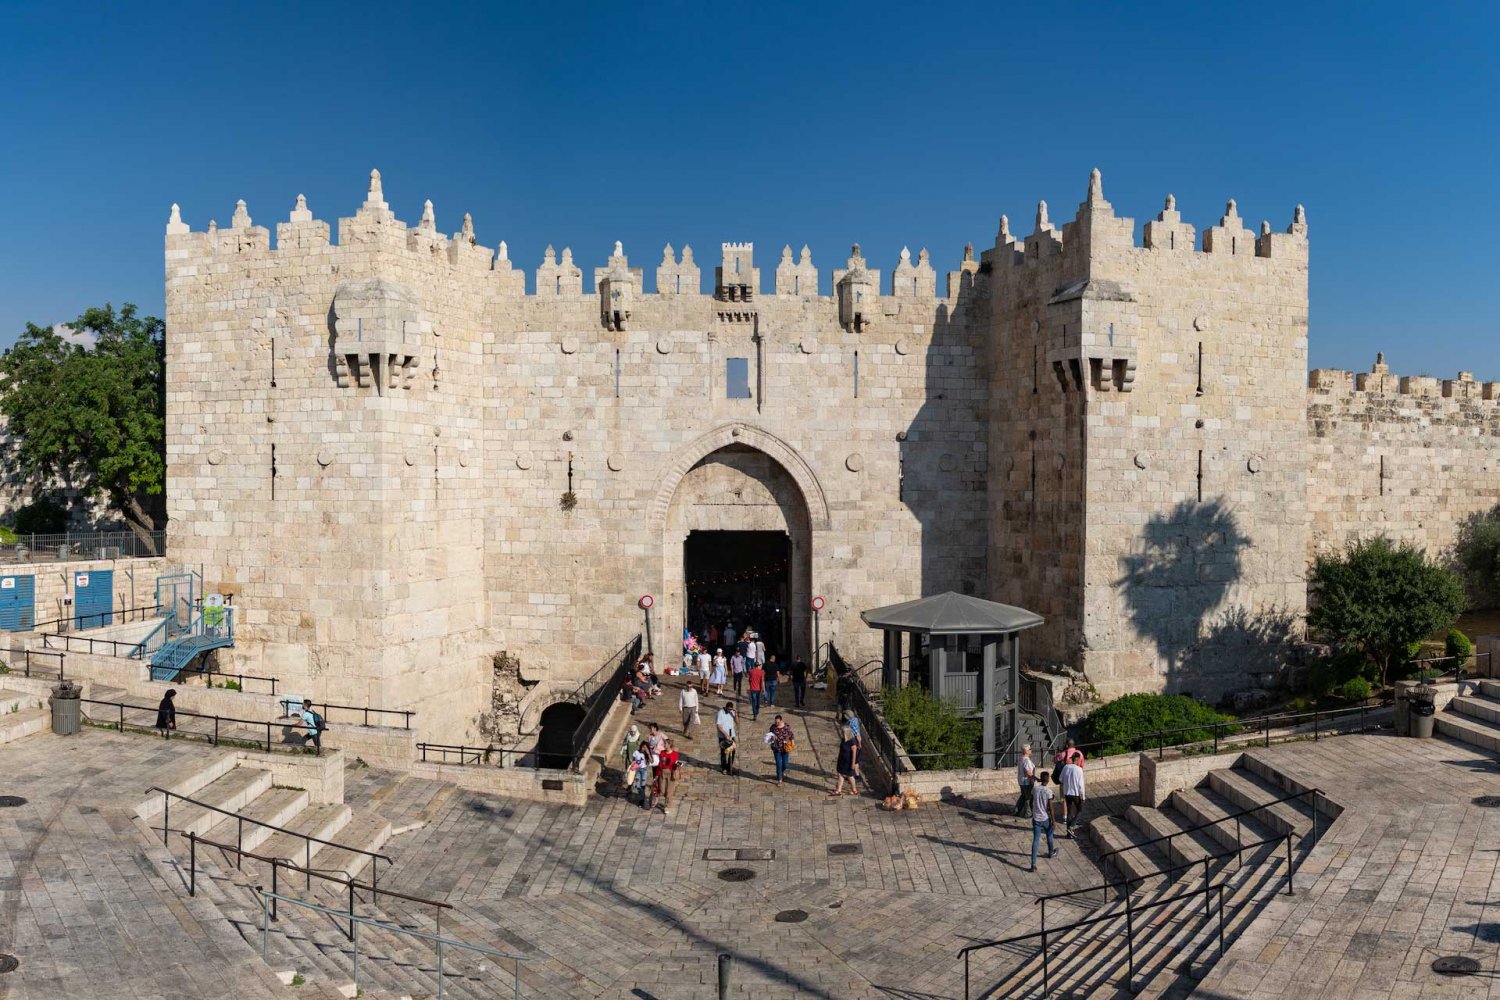 Damascus Gate or Bab al-Amud, one of the gates of Jerusalem's Old City